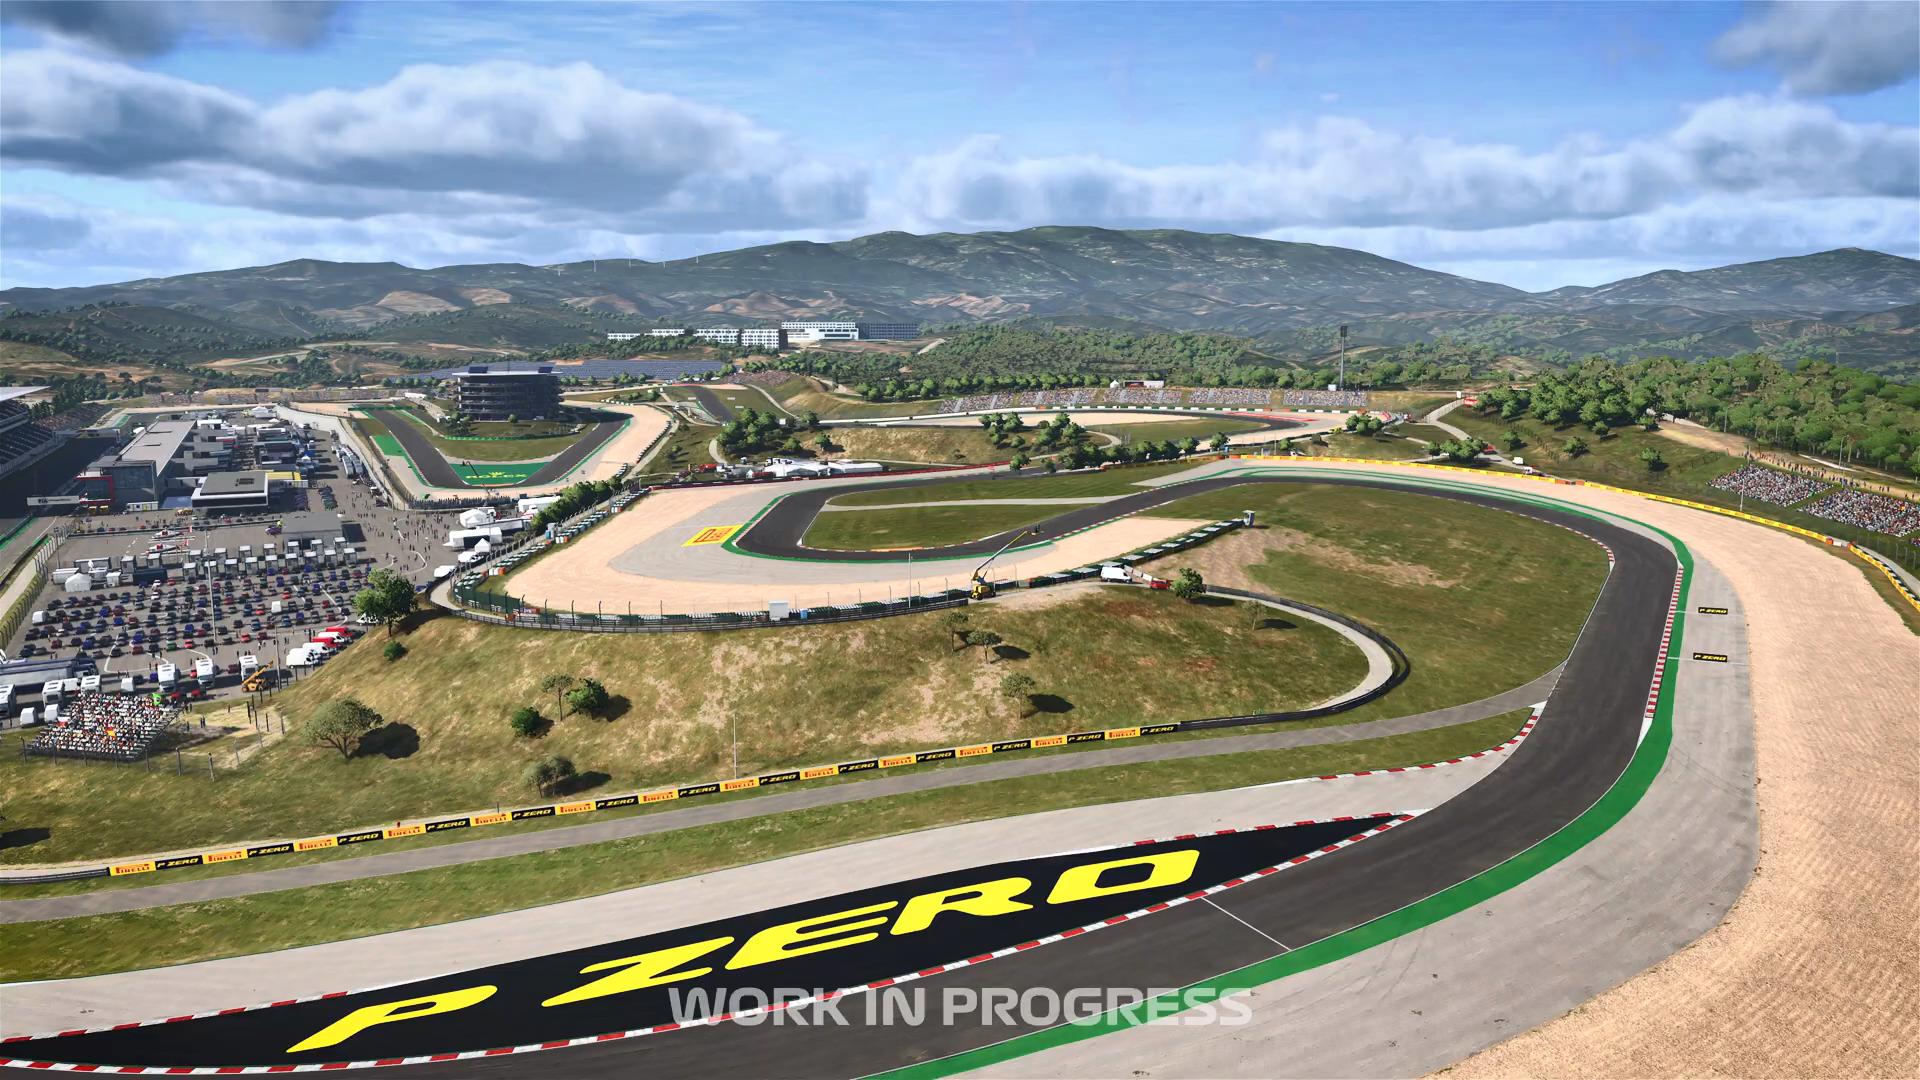 《F1 2021》发布免费更新 新赛道Portimao上线